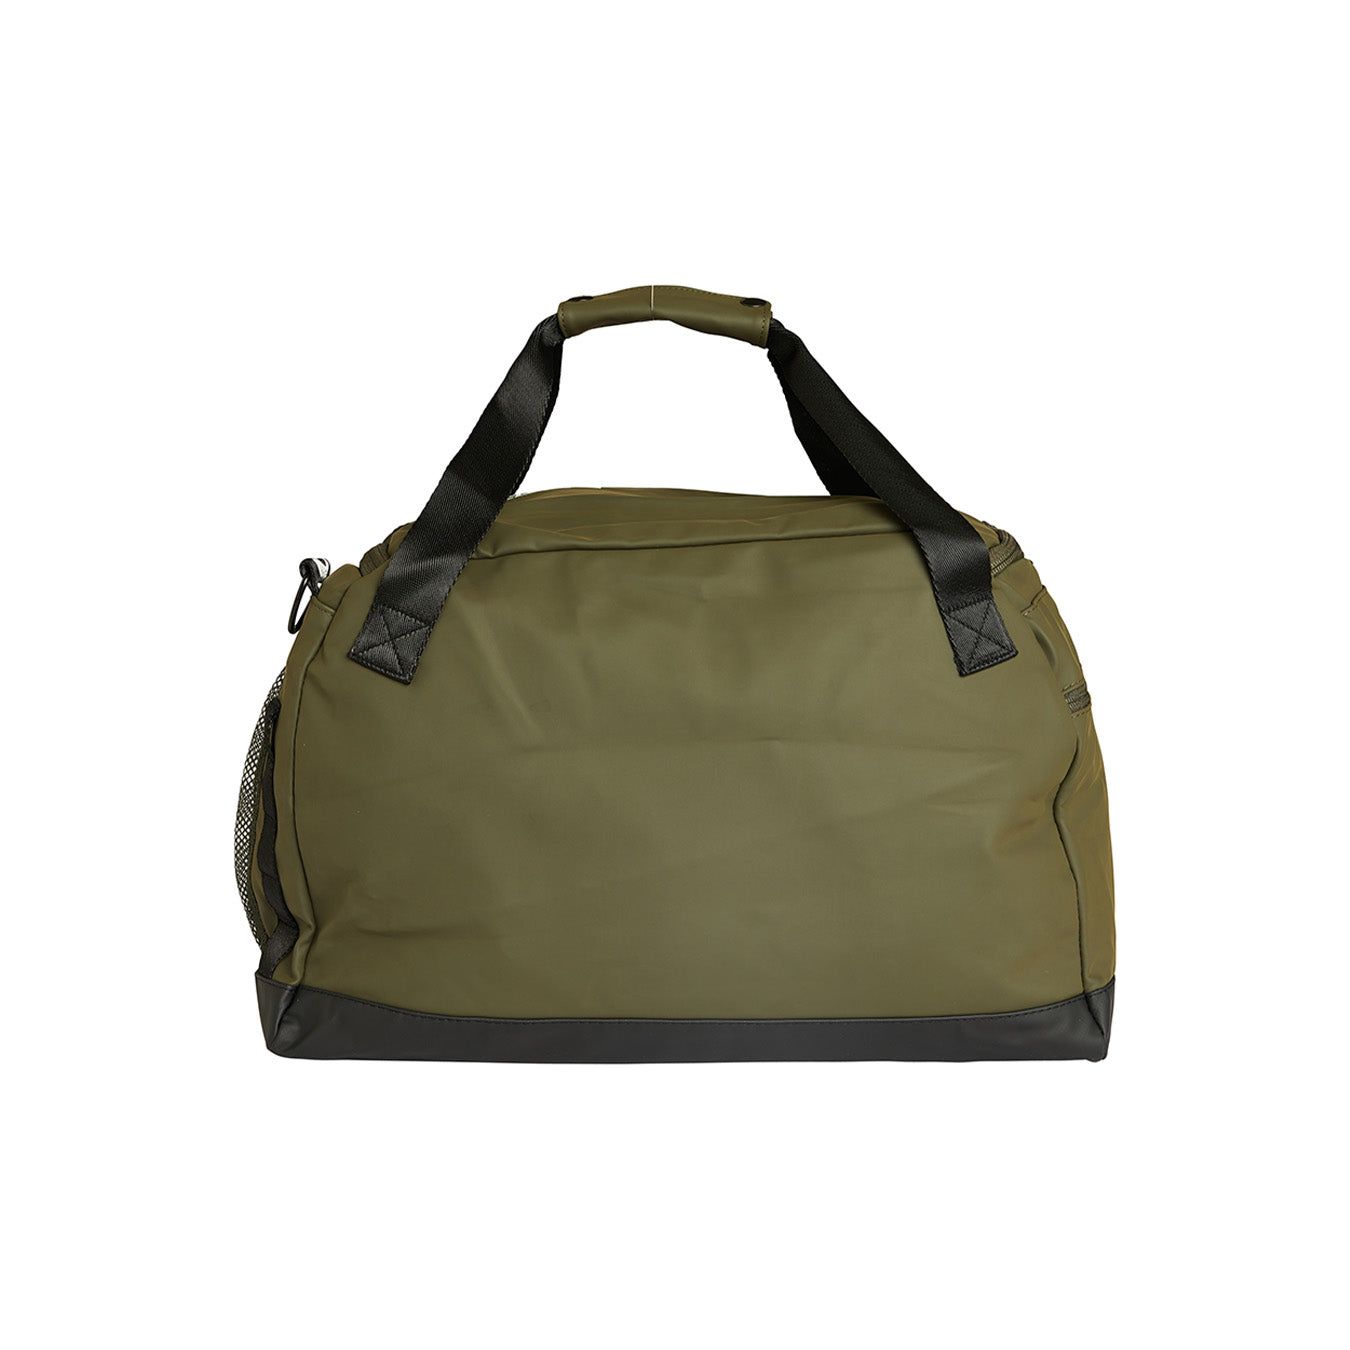 DHaRCO 30L Duffle Bag - Camo